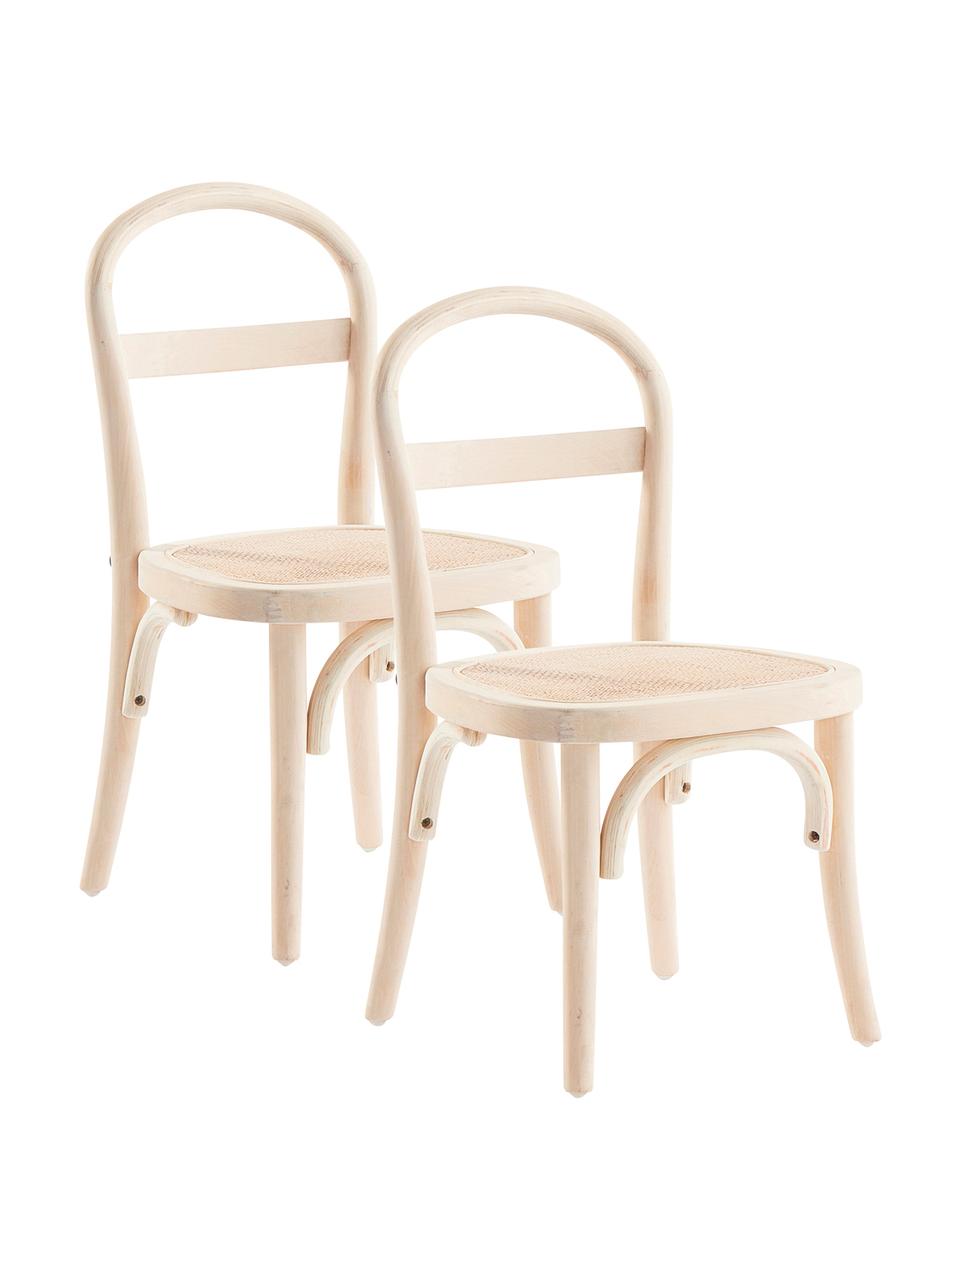 Holz-Kinderstühle Rippats mit Wiener Geflecht, 2 Stück, Gestell: Birkenholz, Sitzfläche: Rattan, Beige, B 33 x T 35 cm